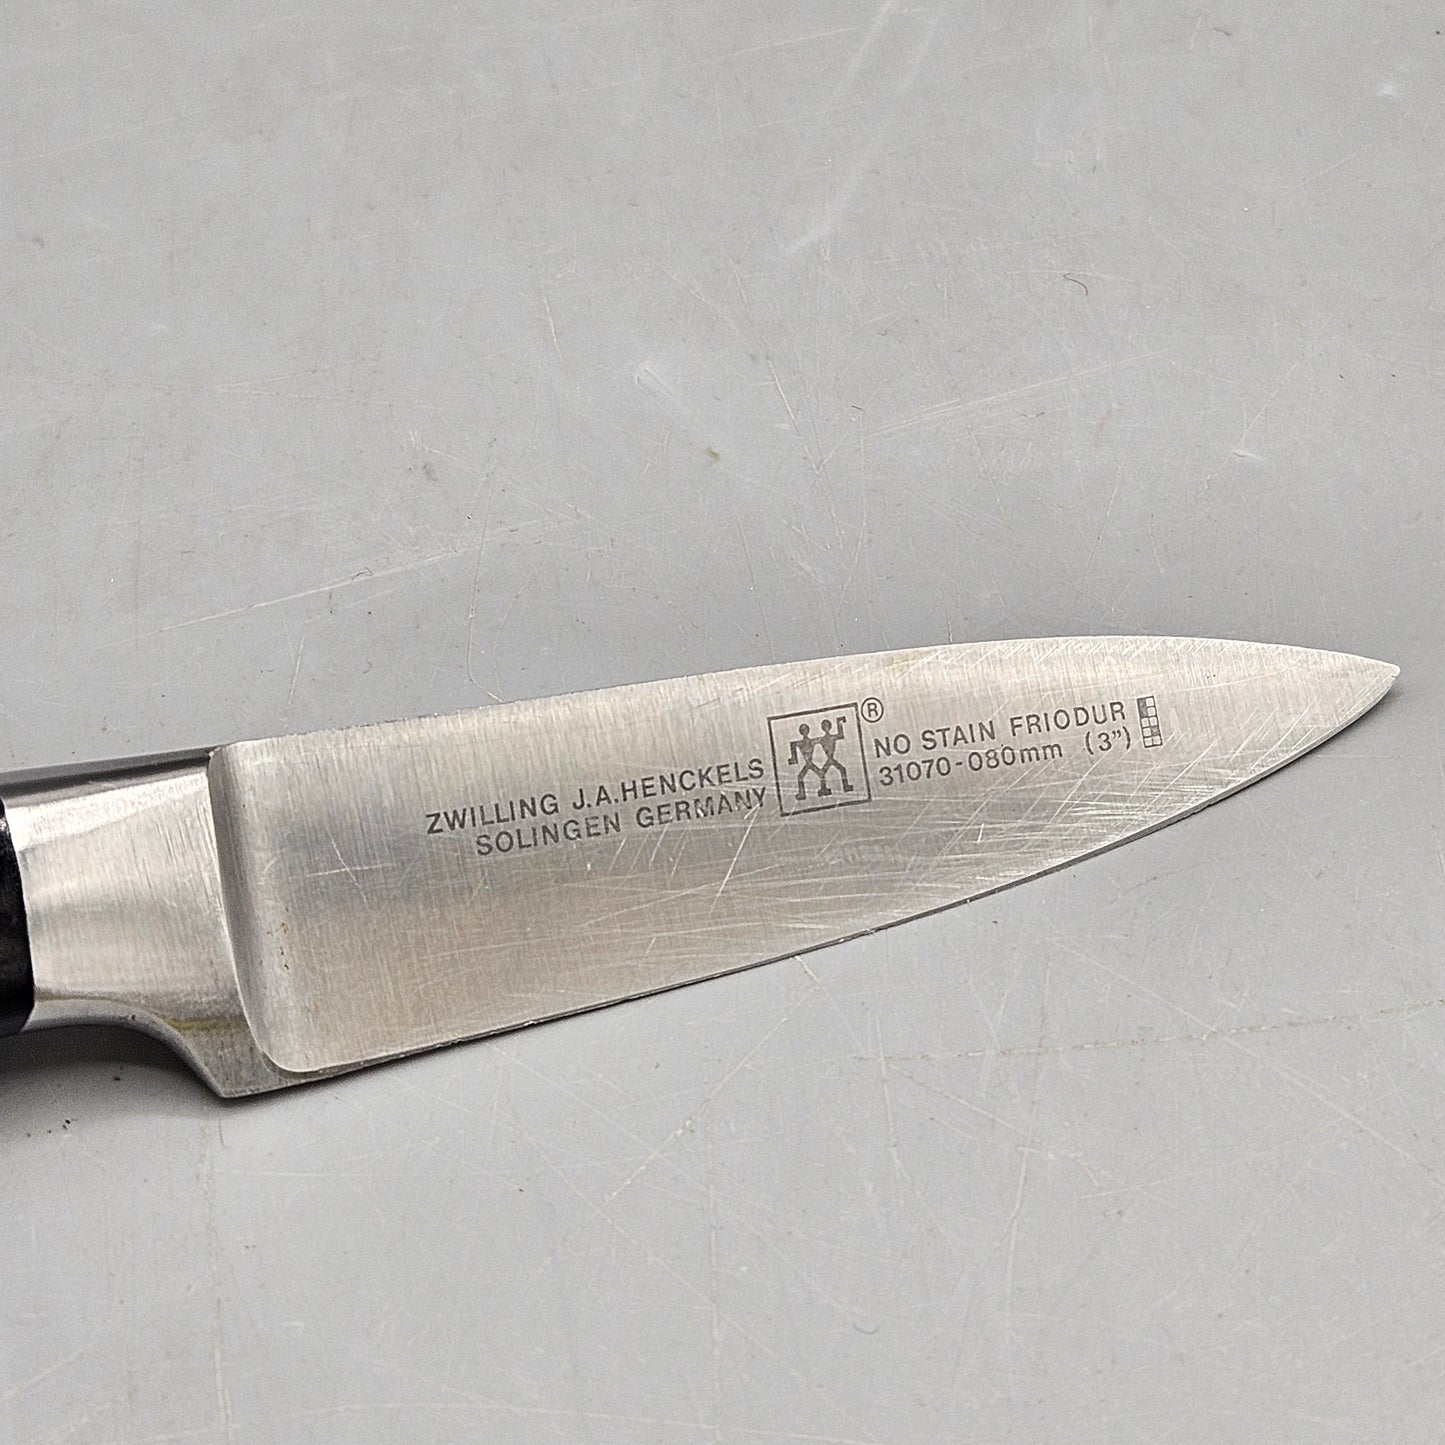 Zwilling J.A. Henckels 31070-080mm 3" Paring Knife